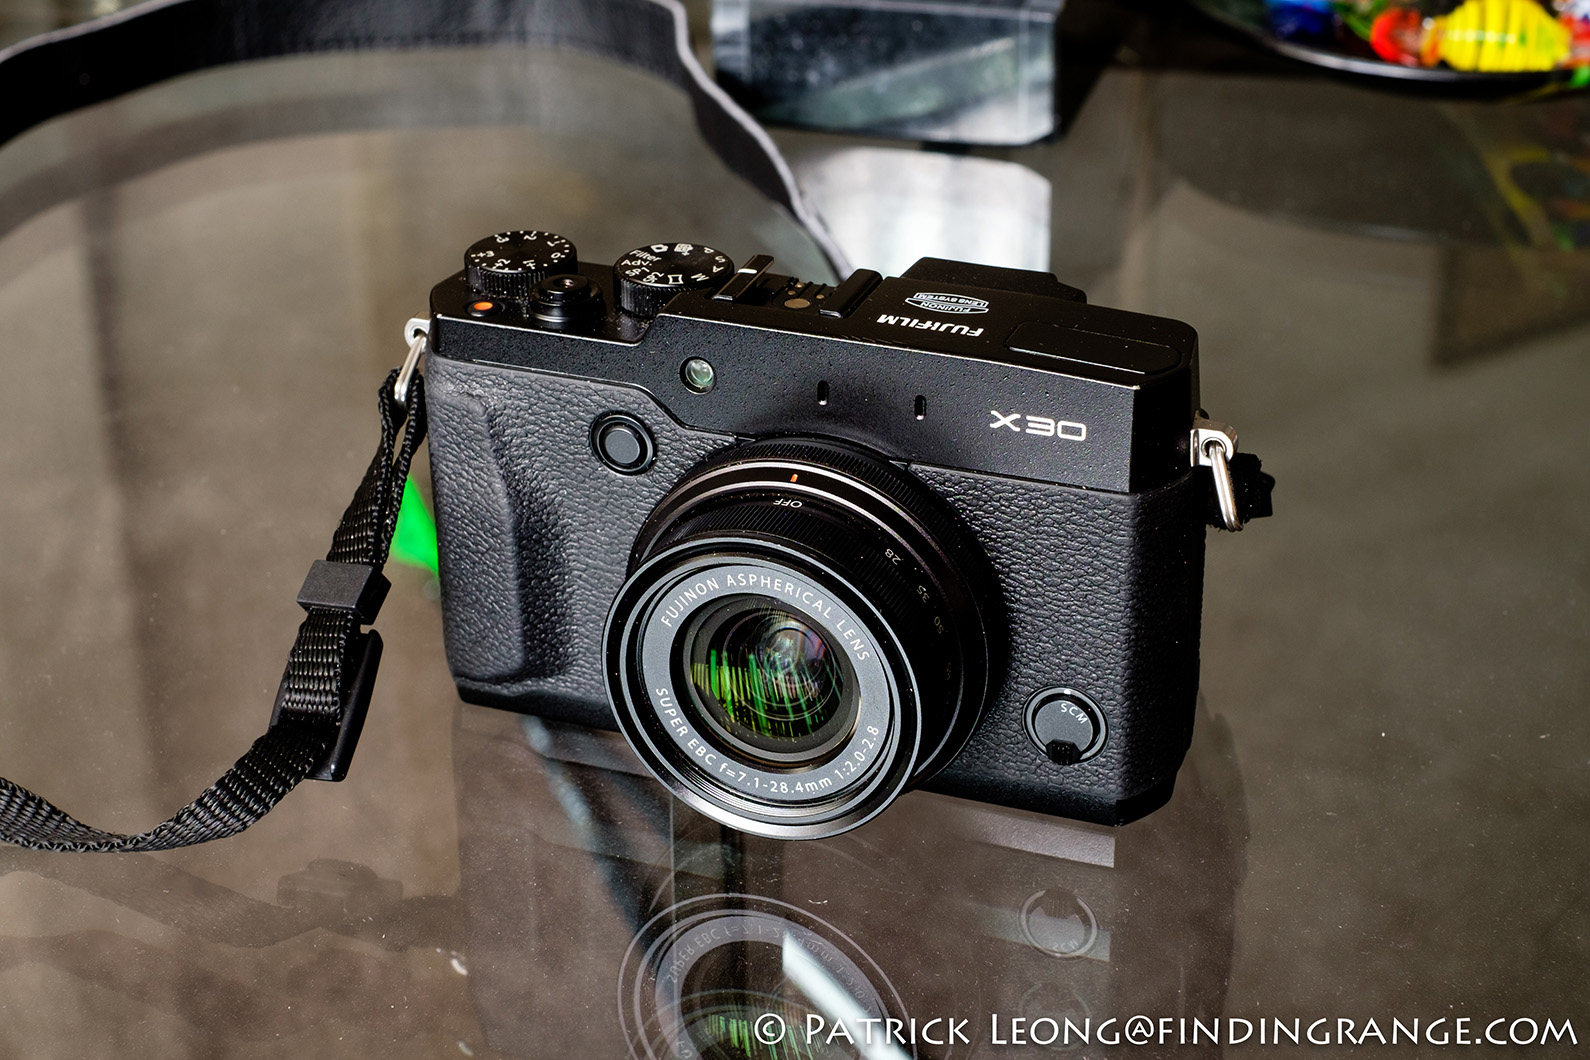 Fuji X30 Compact Camera Review